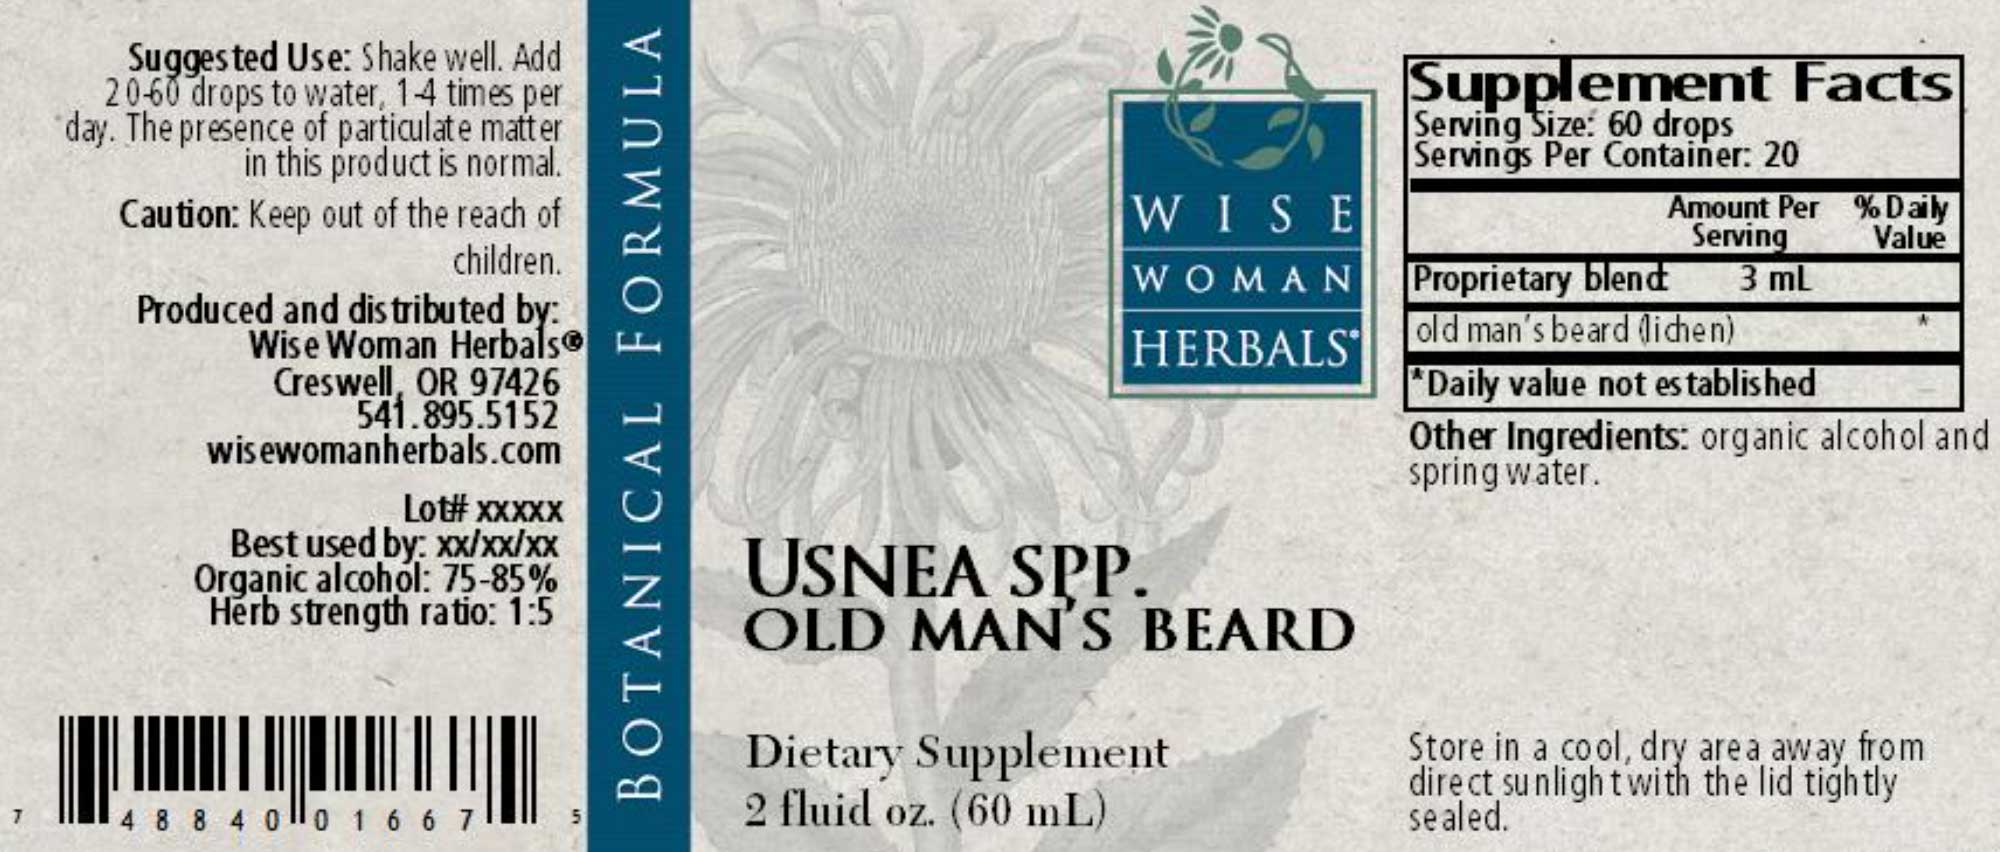 Wise Woman Herbals Usnea Spp Old Man's Beard Label